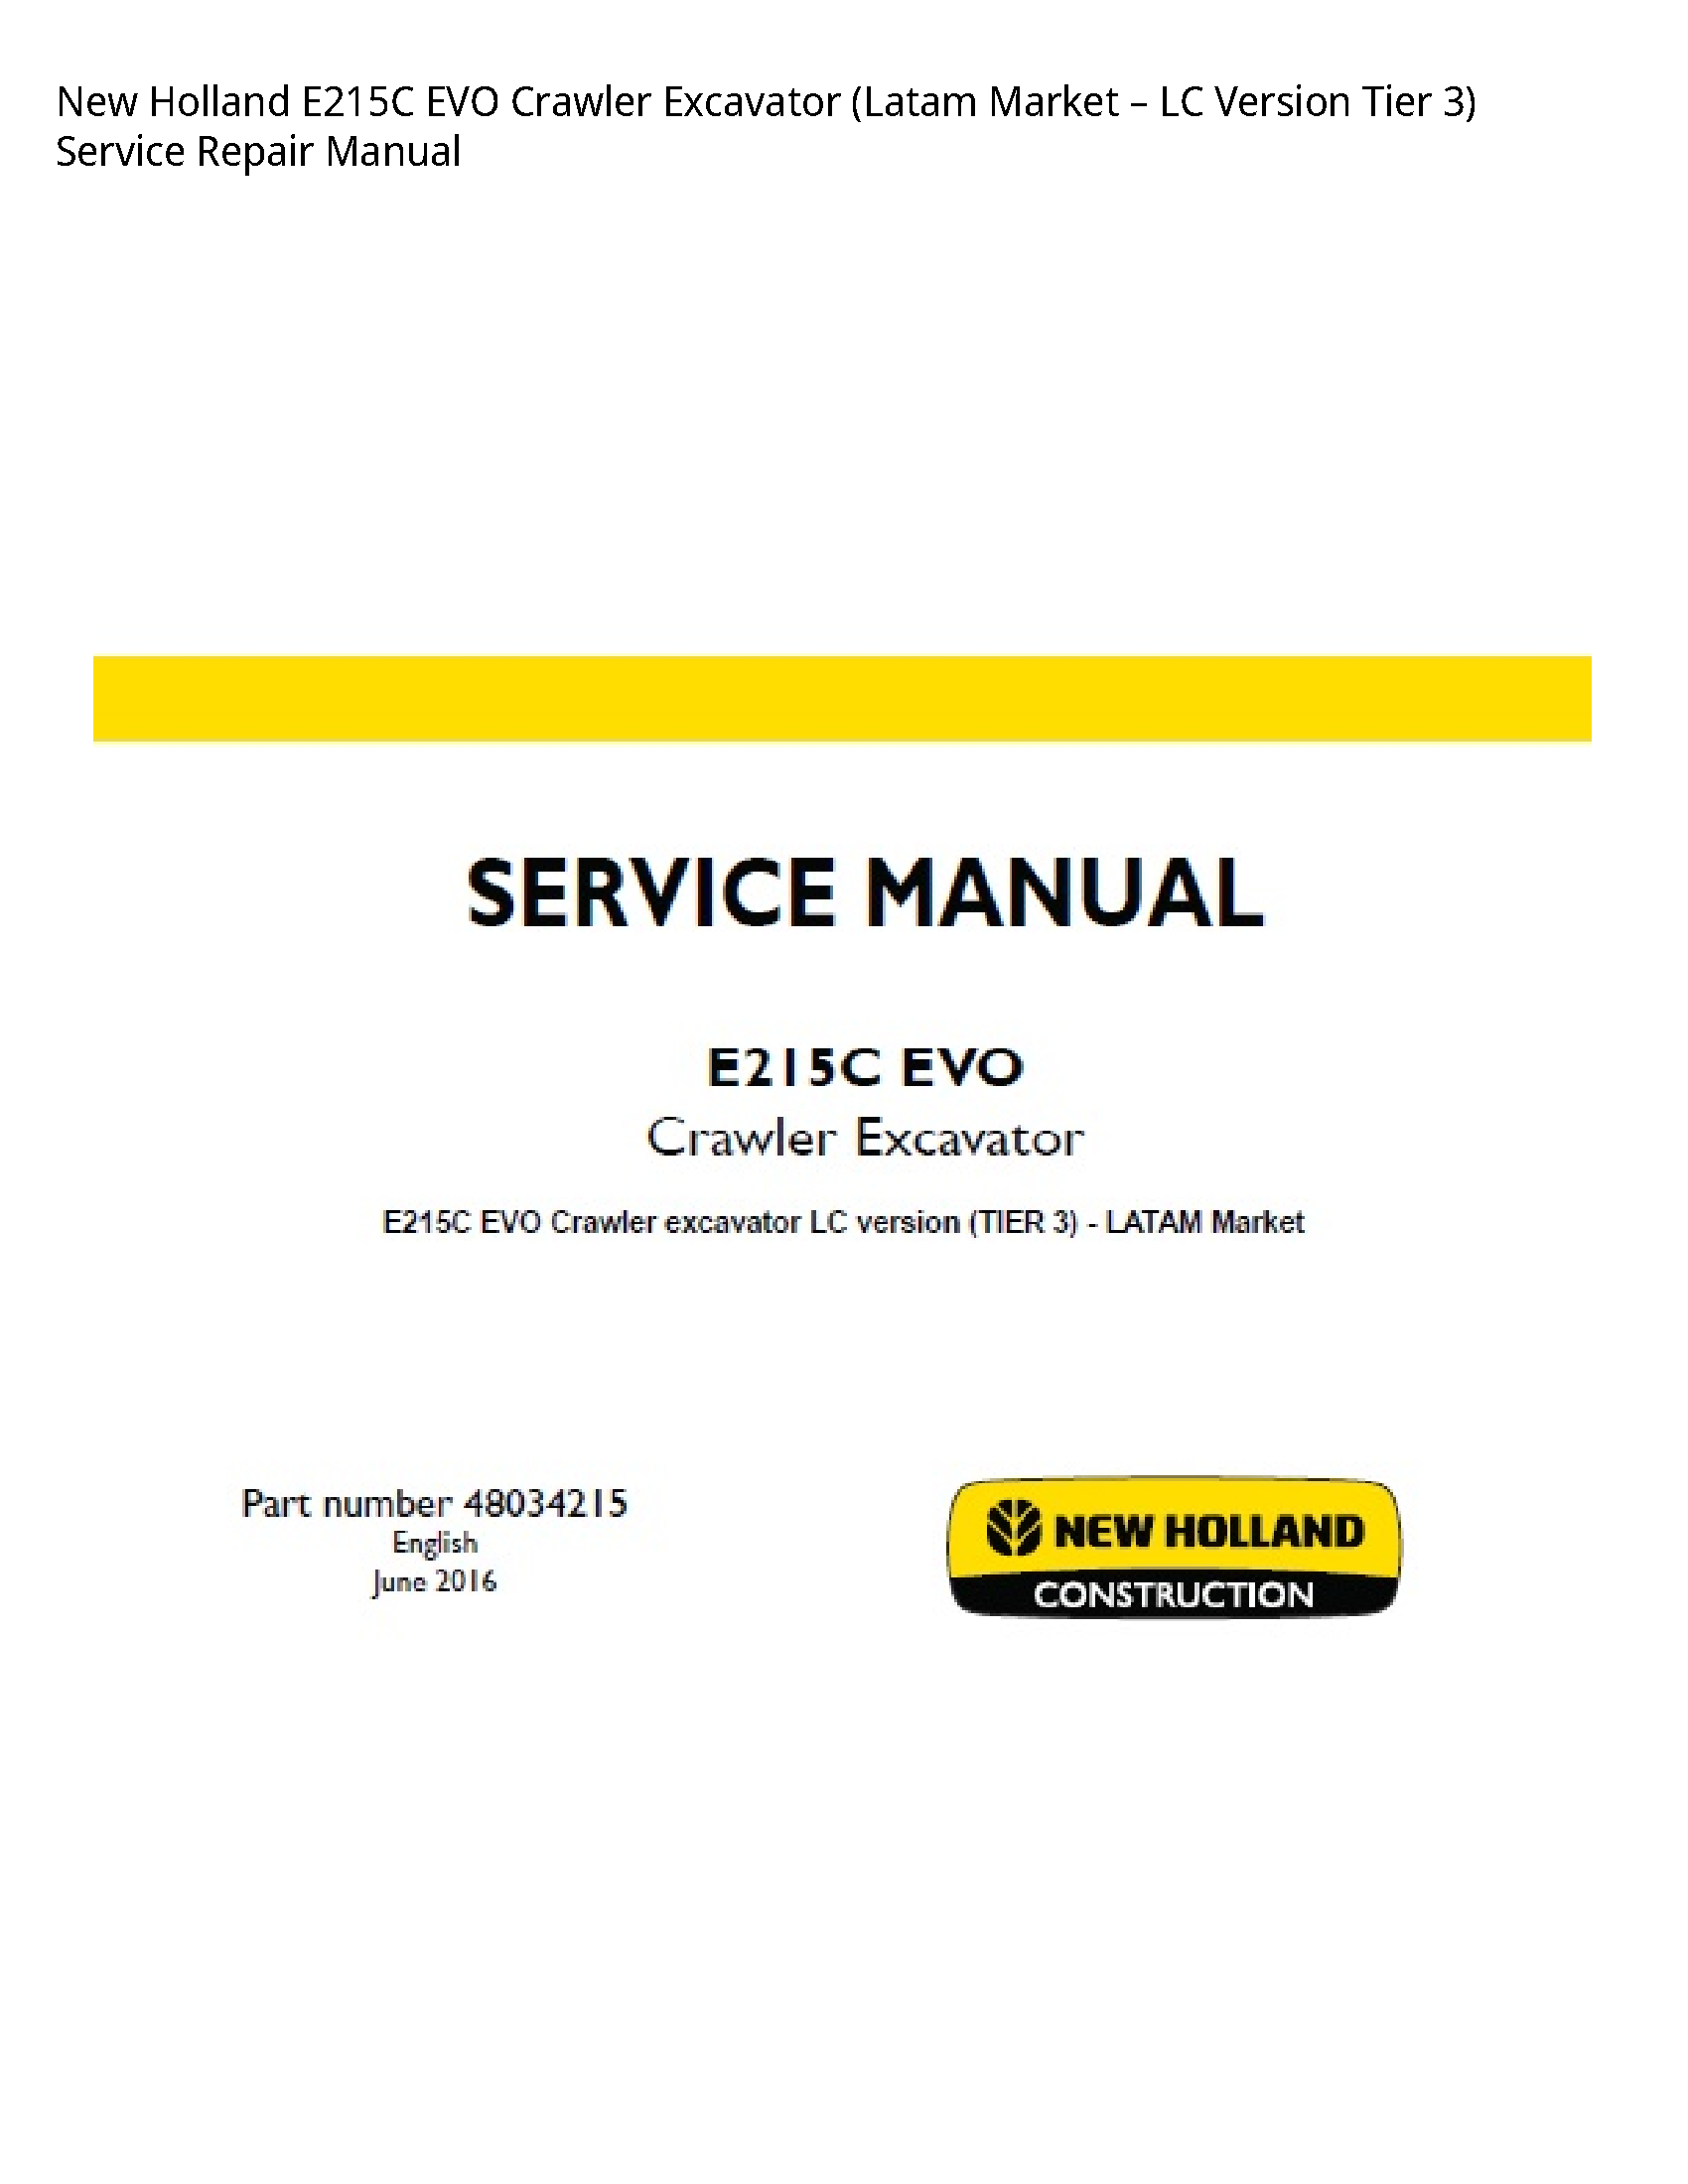 New Holland E215C EVO Crawler Excavator (Latam Market LC Version Tier manual